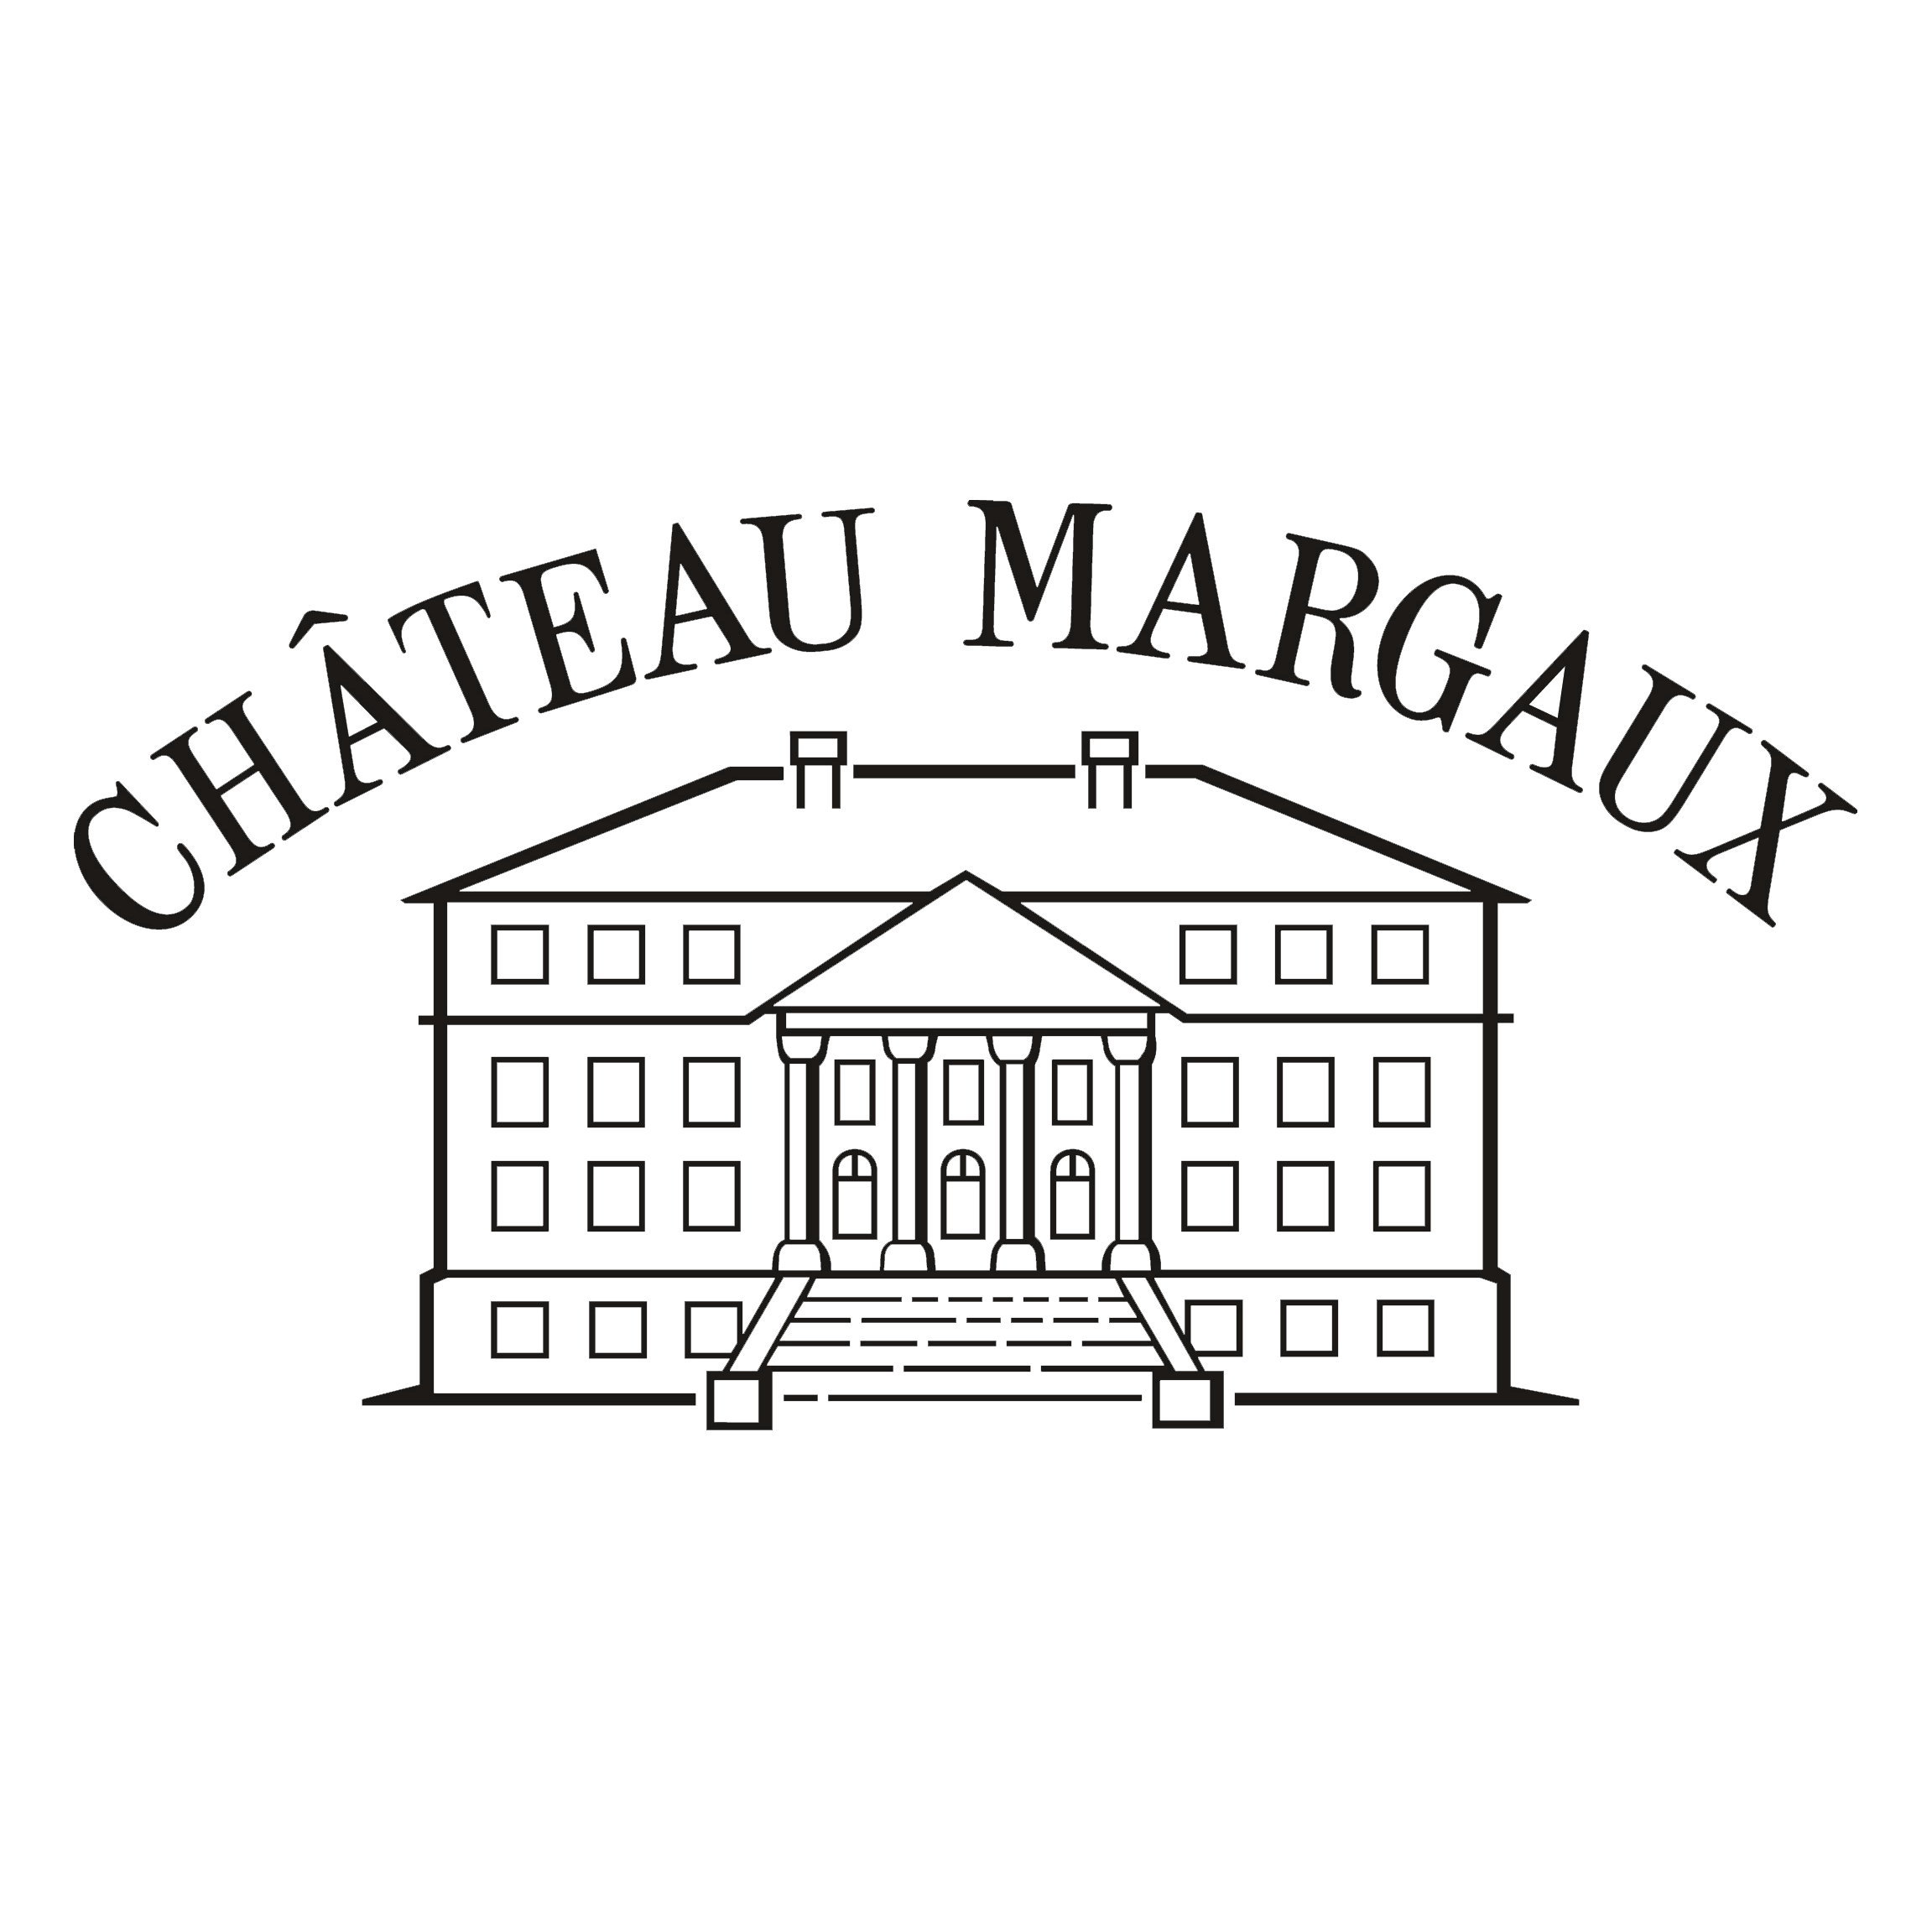 Château Margaux's logo